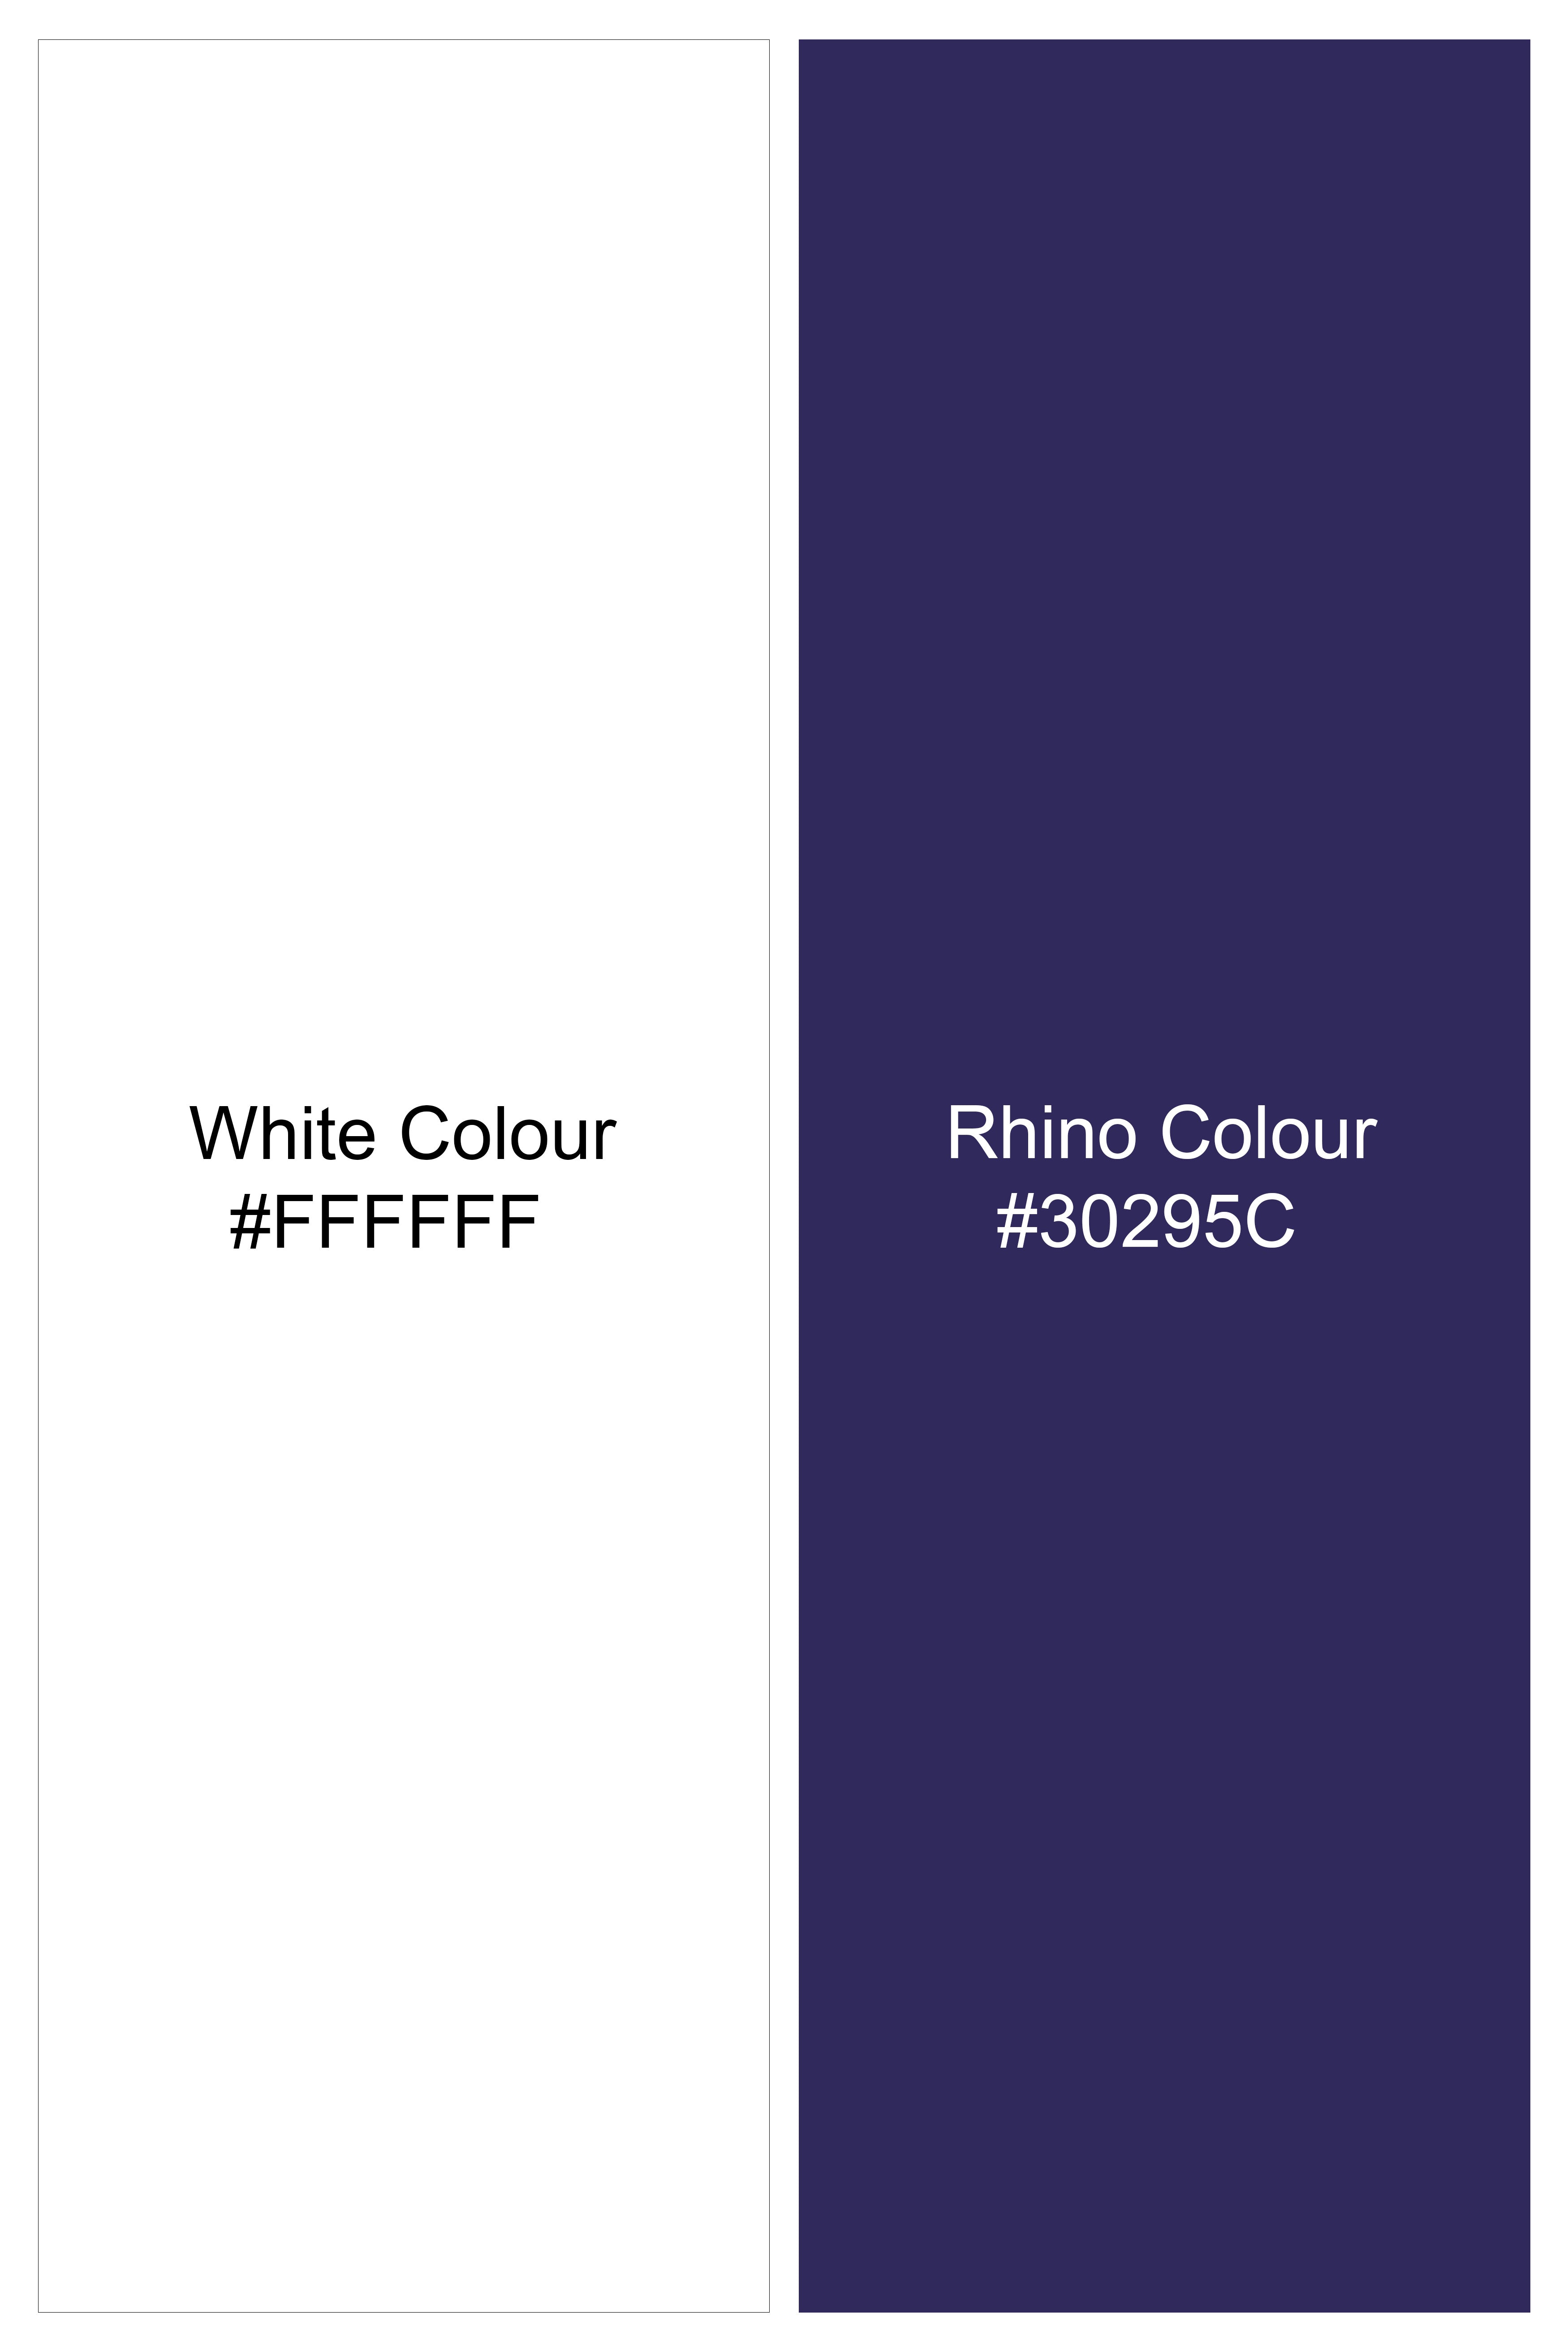 Bright White with Rhino Blue Striped Dobby Textured Premium Giza Cotton Shirt 10312-CA-38, 10312-CA-H-38, 10312-CA-39, 10312-CA-H-39, 10312-CA-40, 10312-CA-H-40, 10312-CA-42, 10312-CA-H-42, 10312-CA-44, 10312-CA-H-44, 10312-CA-46, 10312-CA-H-46, 10312-CA-48, 10312-CA-H-48, 10312-CA-50, 10312-CA-H-50, 10312-CA-52, 10312-CA-H-52